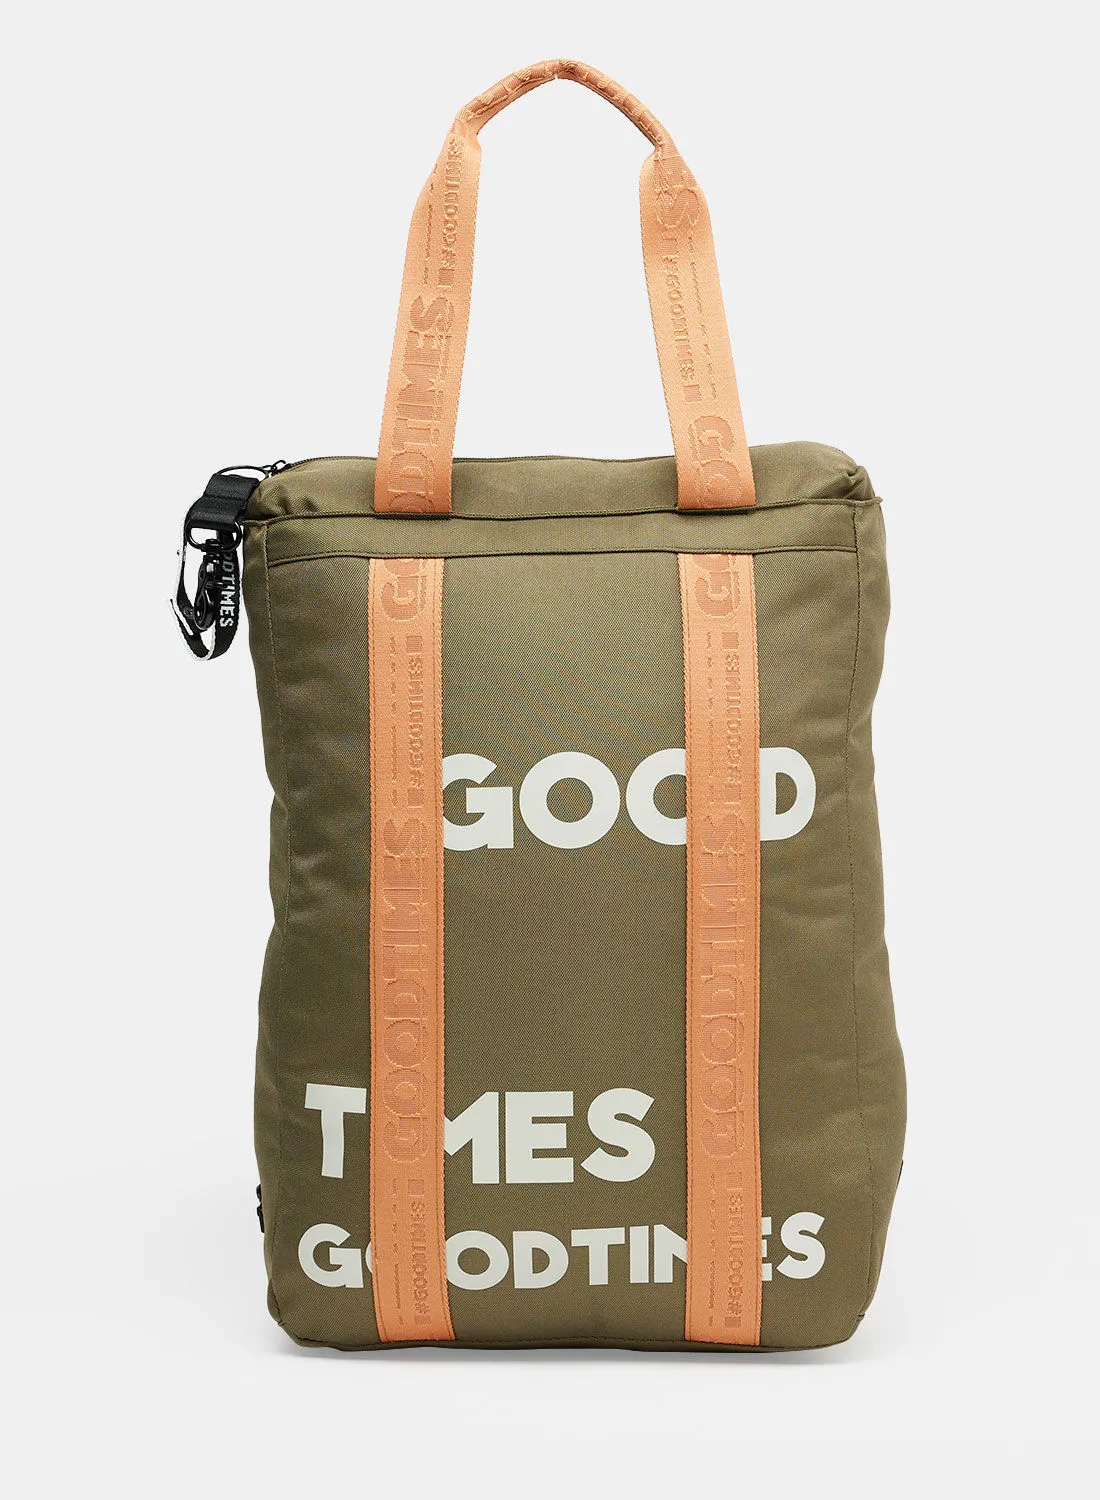 Goodtimes Shoreditch Tote Bag Green